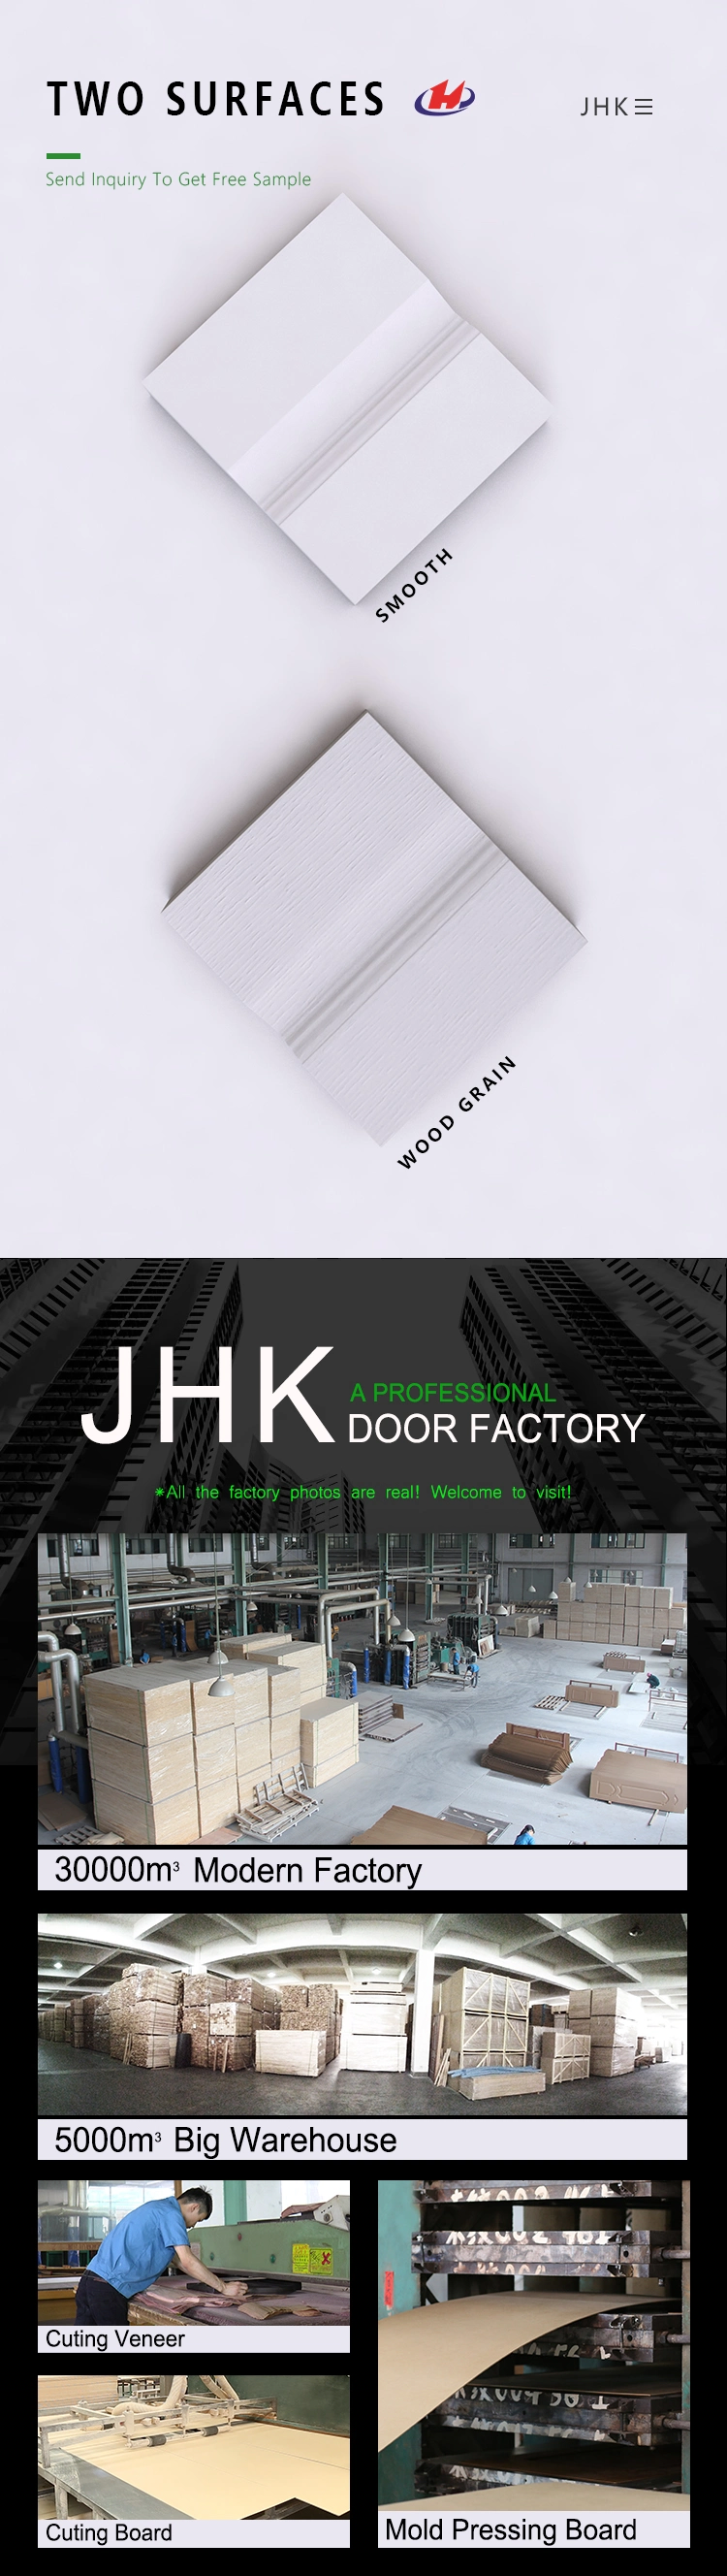 Jhk-006 6 Panel Bargain Price White Door Skin Interior White Primed Door